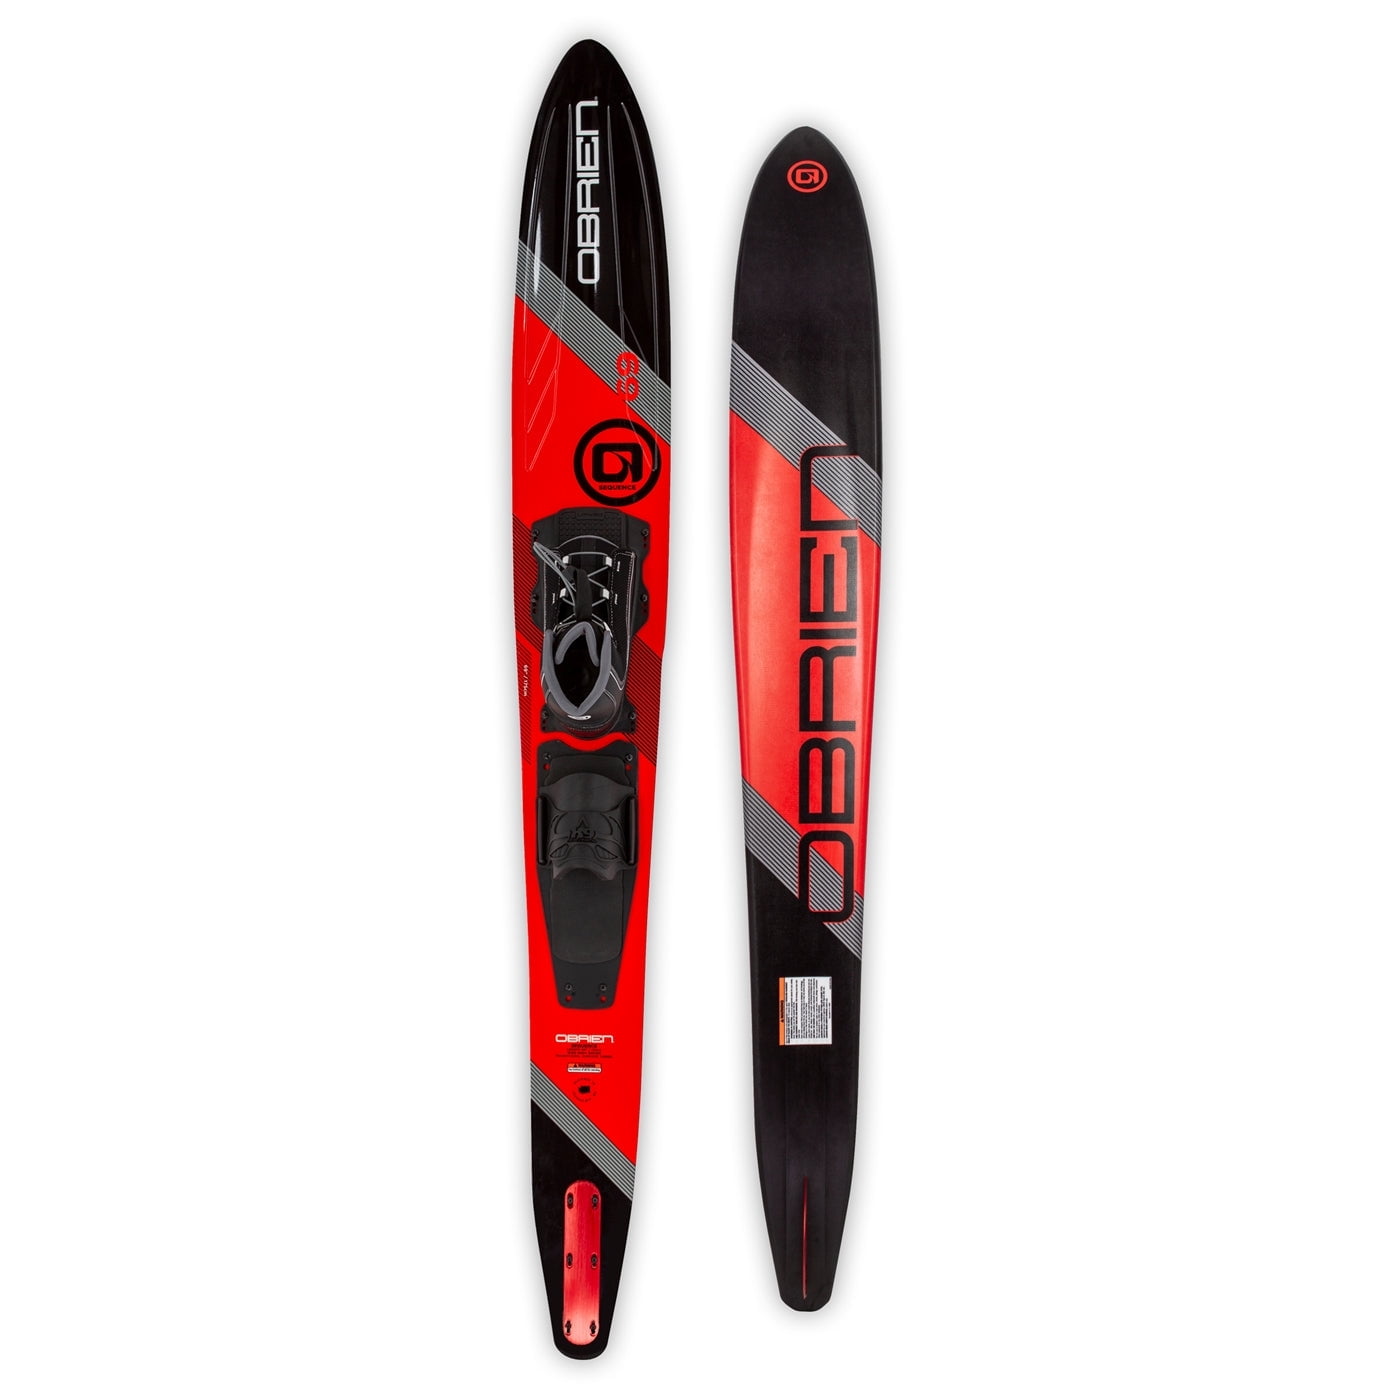 XS-MED Adjustable Contact O'brien Slalom Water Ski Rear TOE Plate Binding Boat 